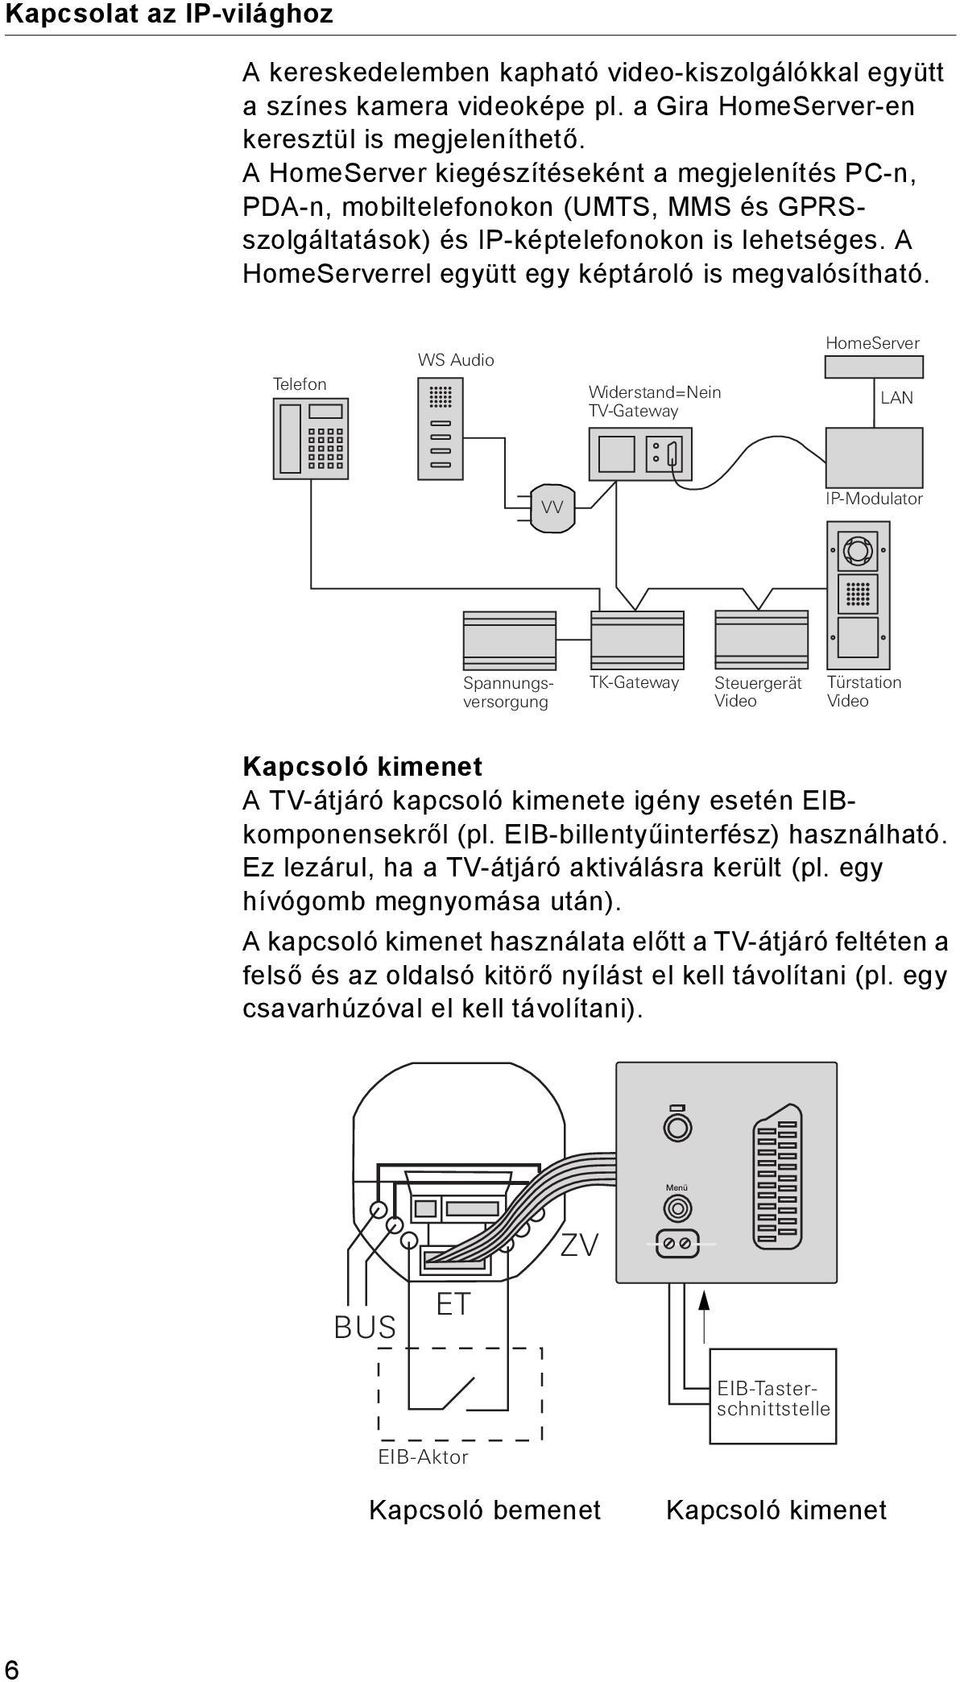 Telefon WS Audio Widerstand=Nein TV-Gateway HomeServer LAN VV IP-Modulator Spannungsversorgung TK-Gateway Steuergerät Video Türstation Video Kapcsoló kimenet A TV-átjáró kapcsoló kimenete igény